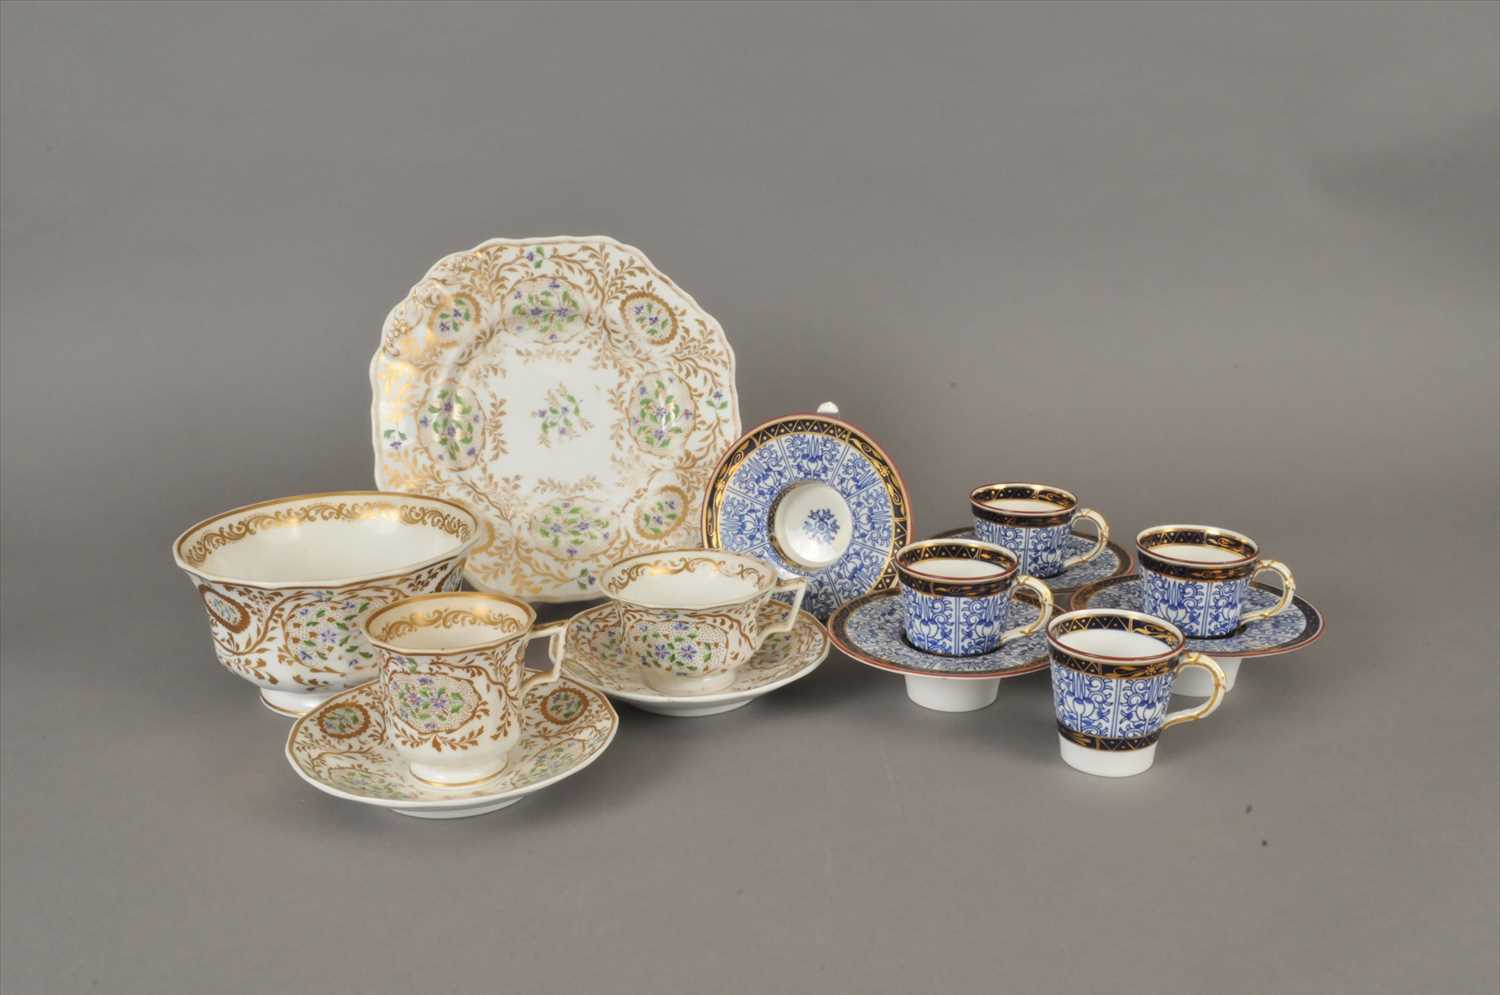 Spode tea service, circa 1835 and Royal Worcester coffeewares